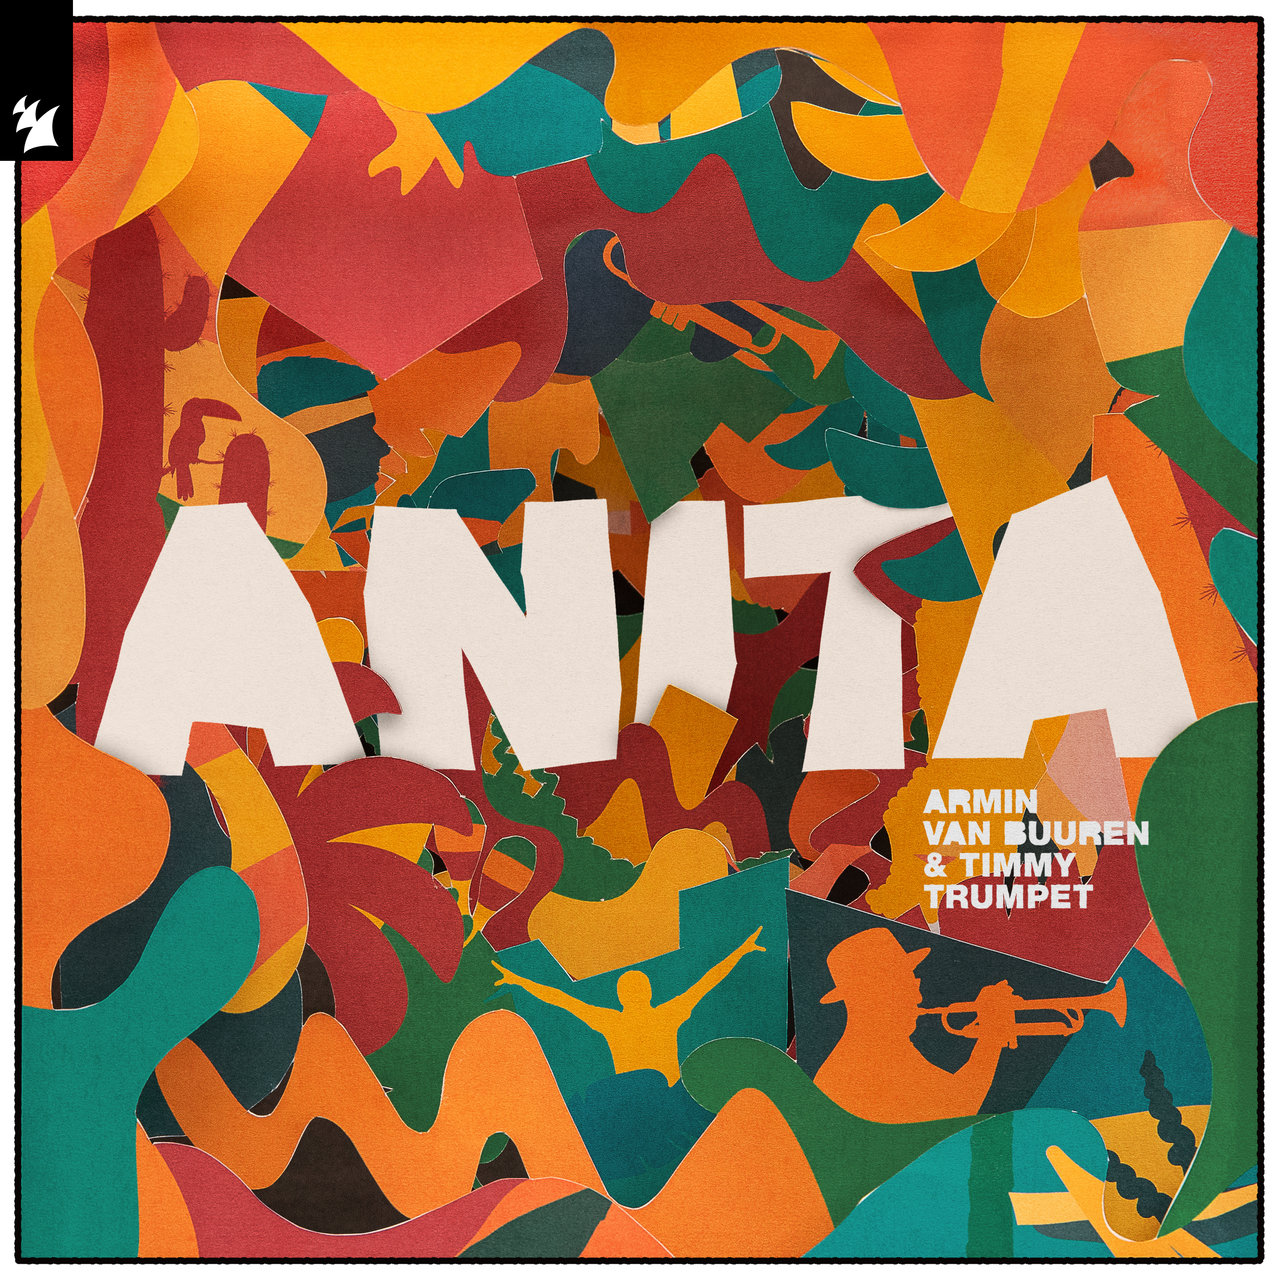 Armin van Buuren & Timmy Trumpet Anita cover artwork